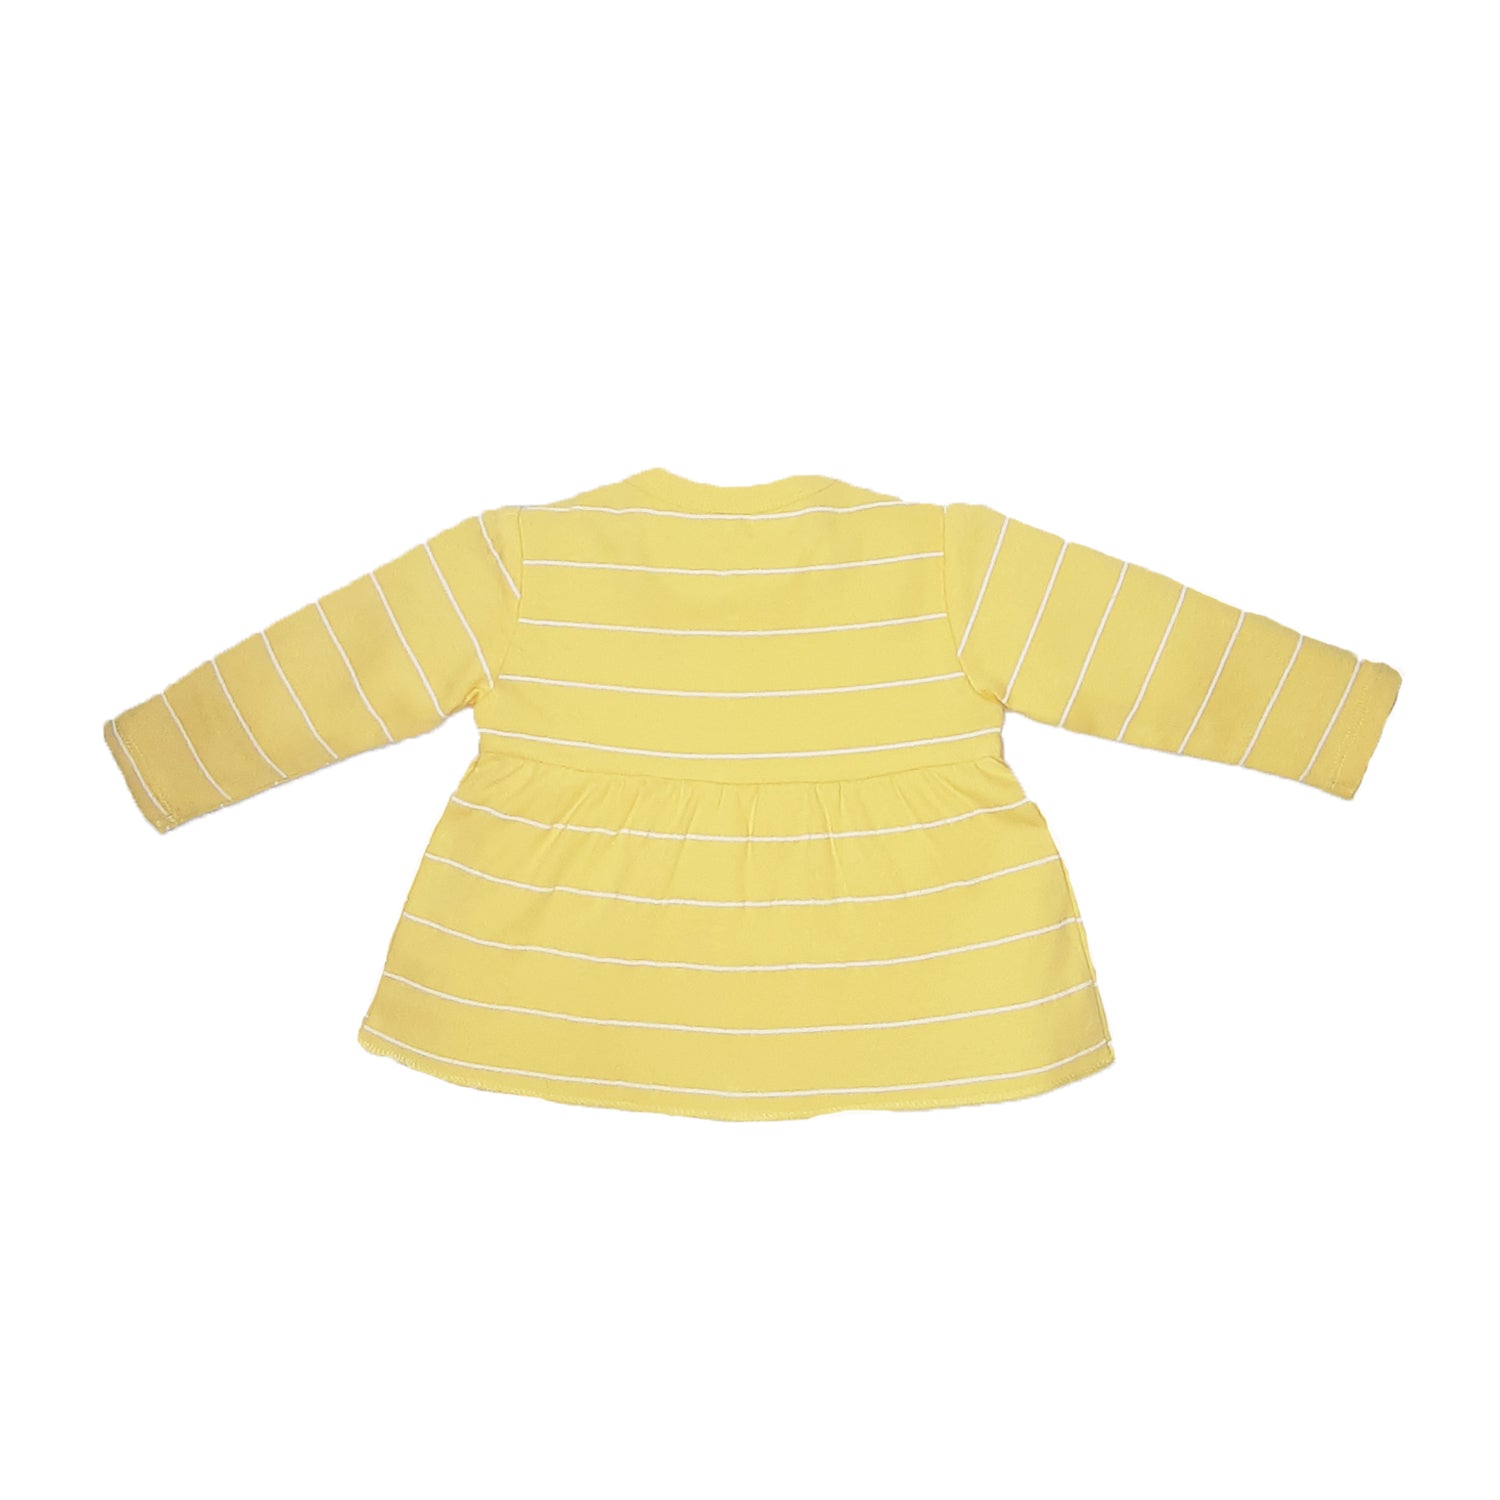 My Milestones T-shirt Full Sleeves Girls Yellow Striped / Aqua Striped - 2 Pc Pack